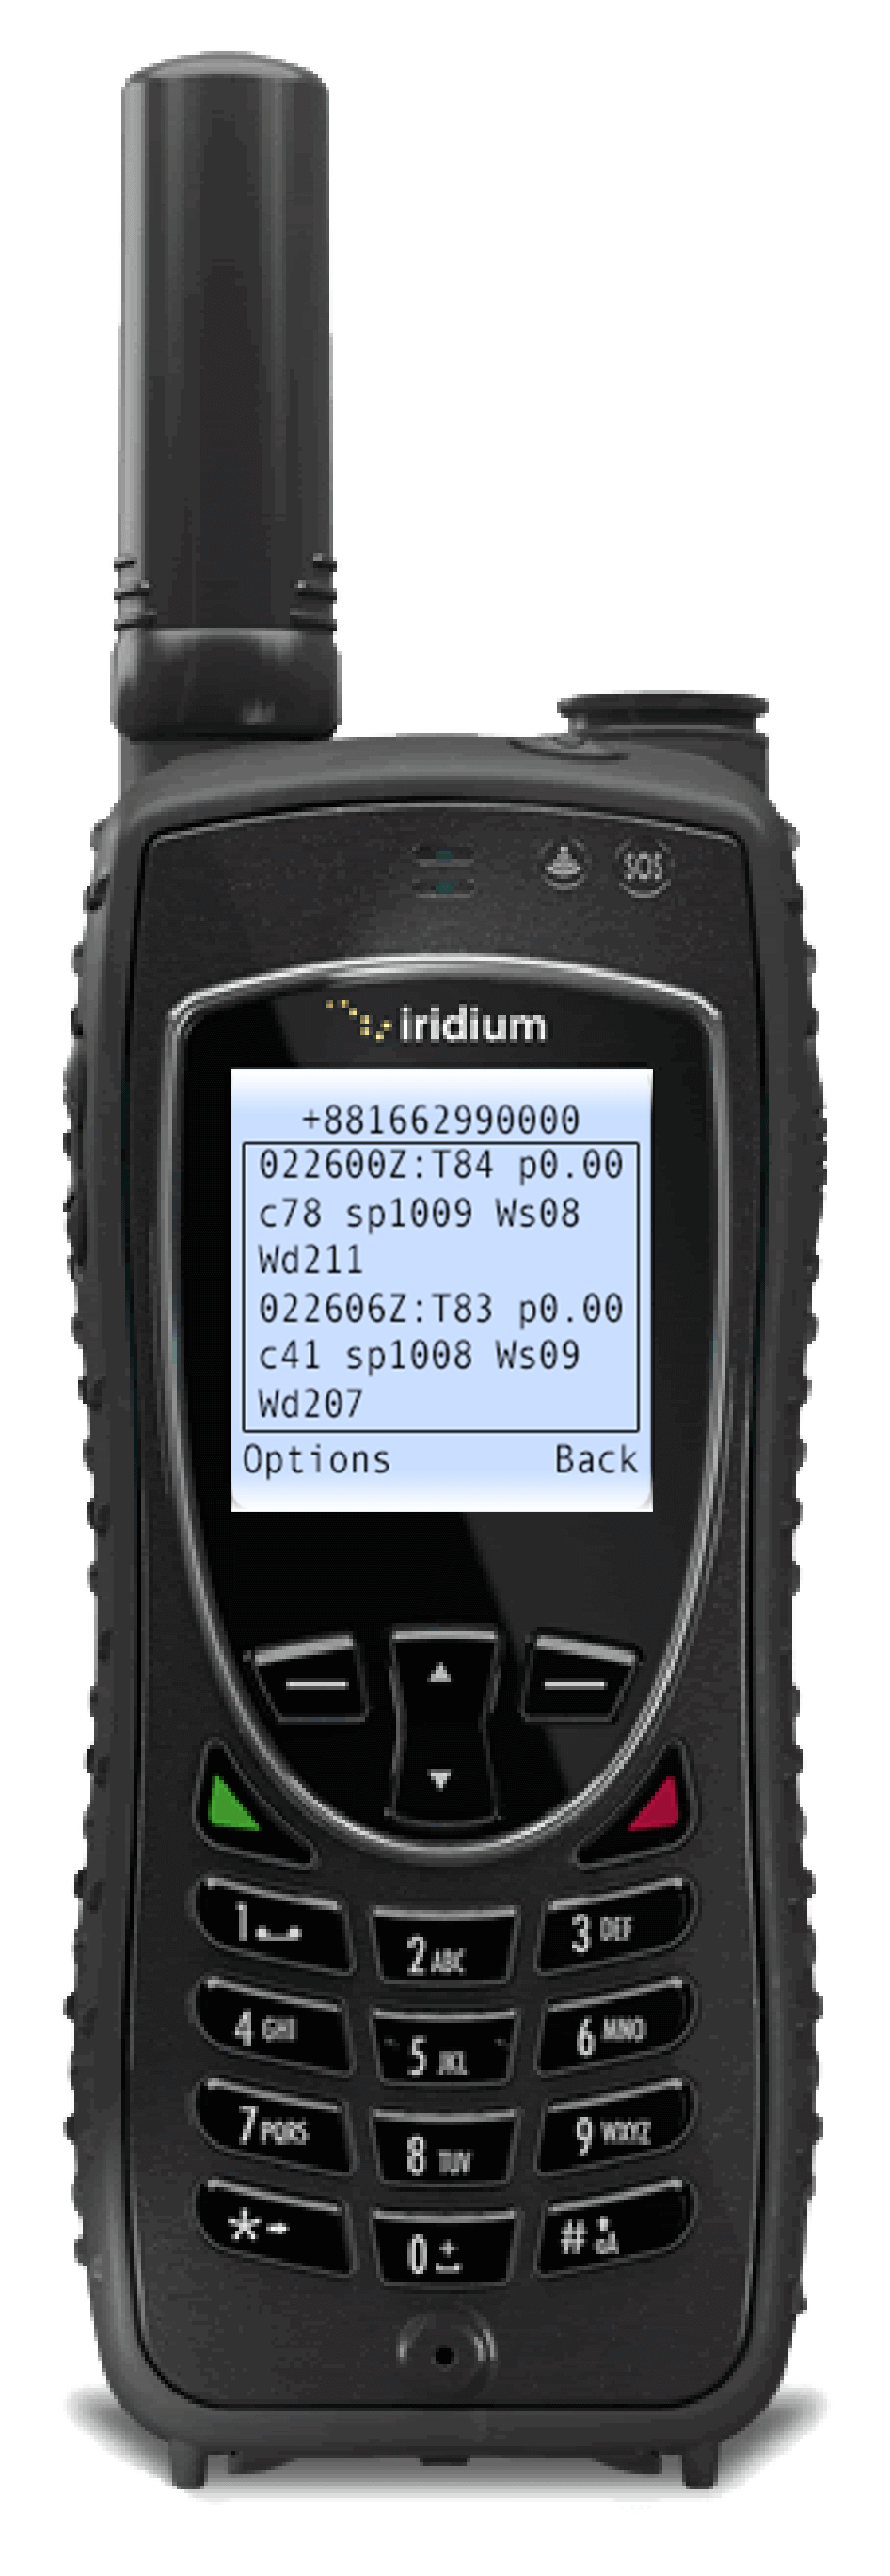 Iridium Extreme 9575 with weather forecast text message